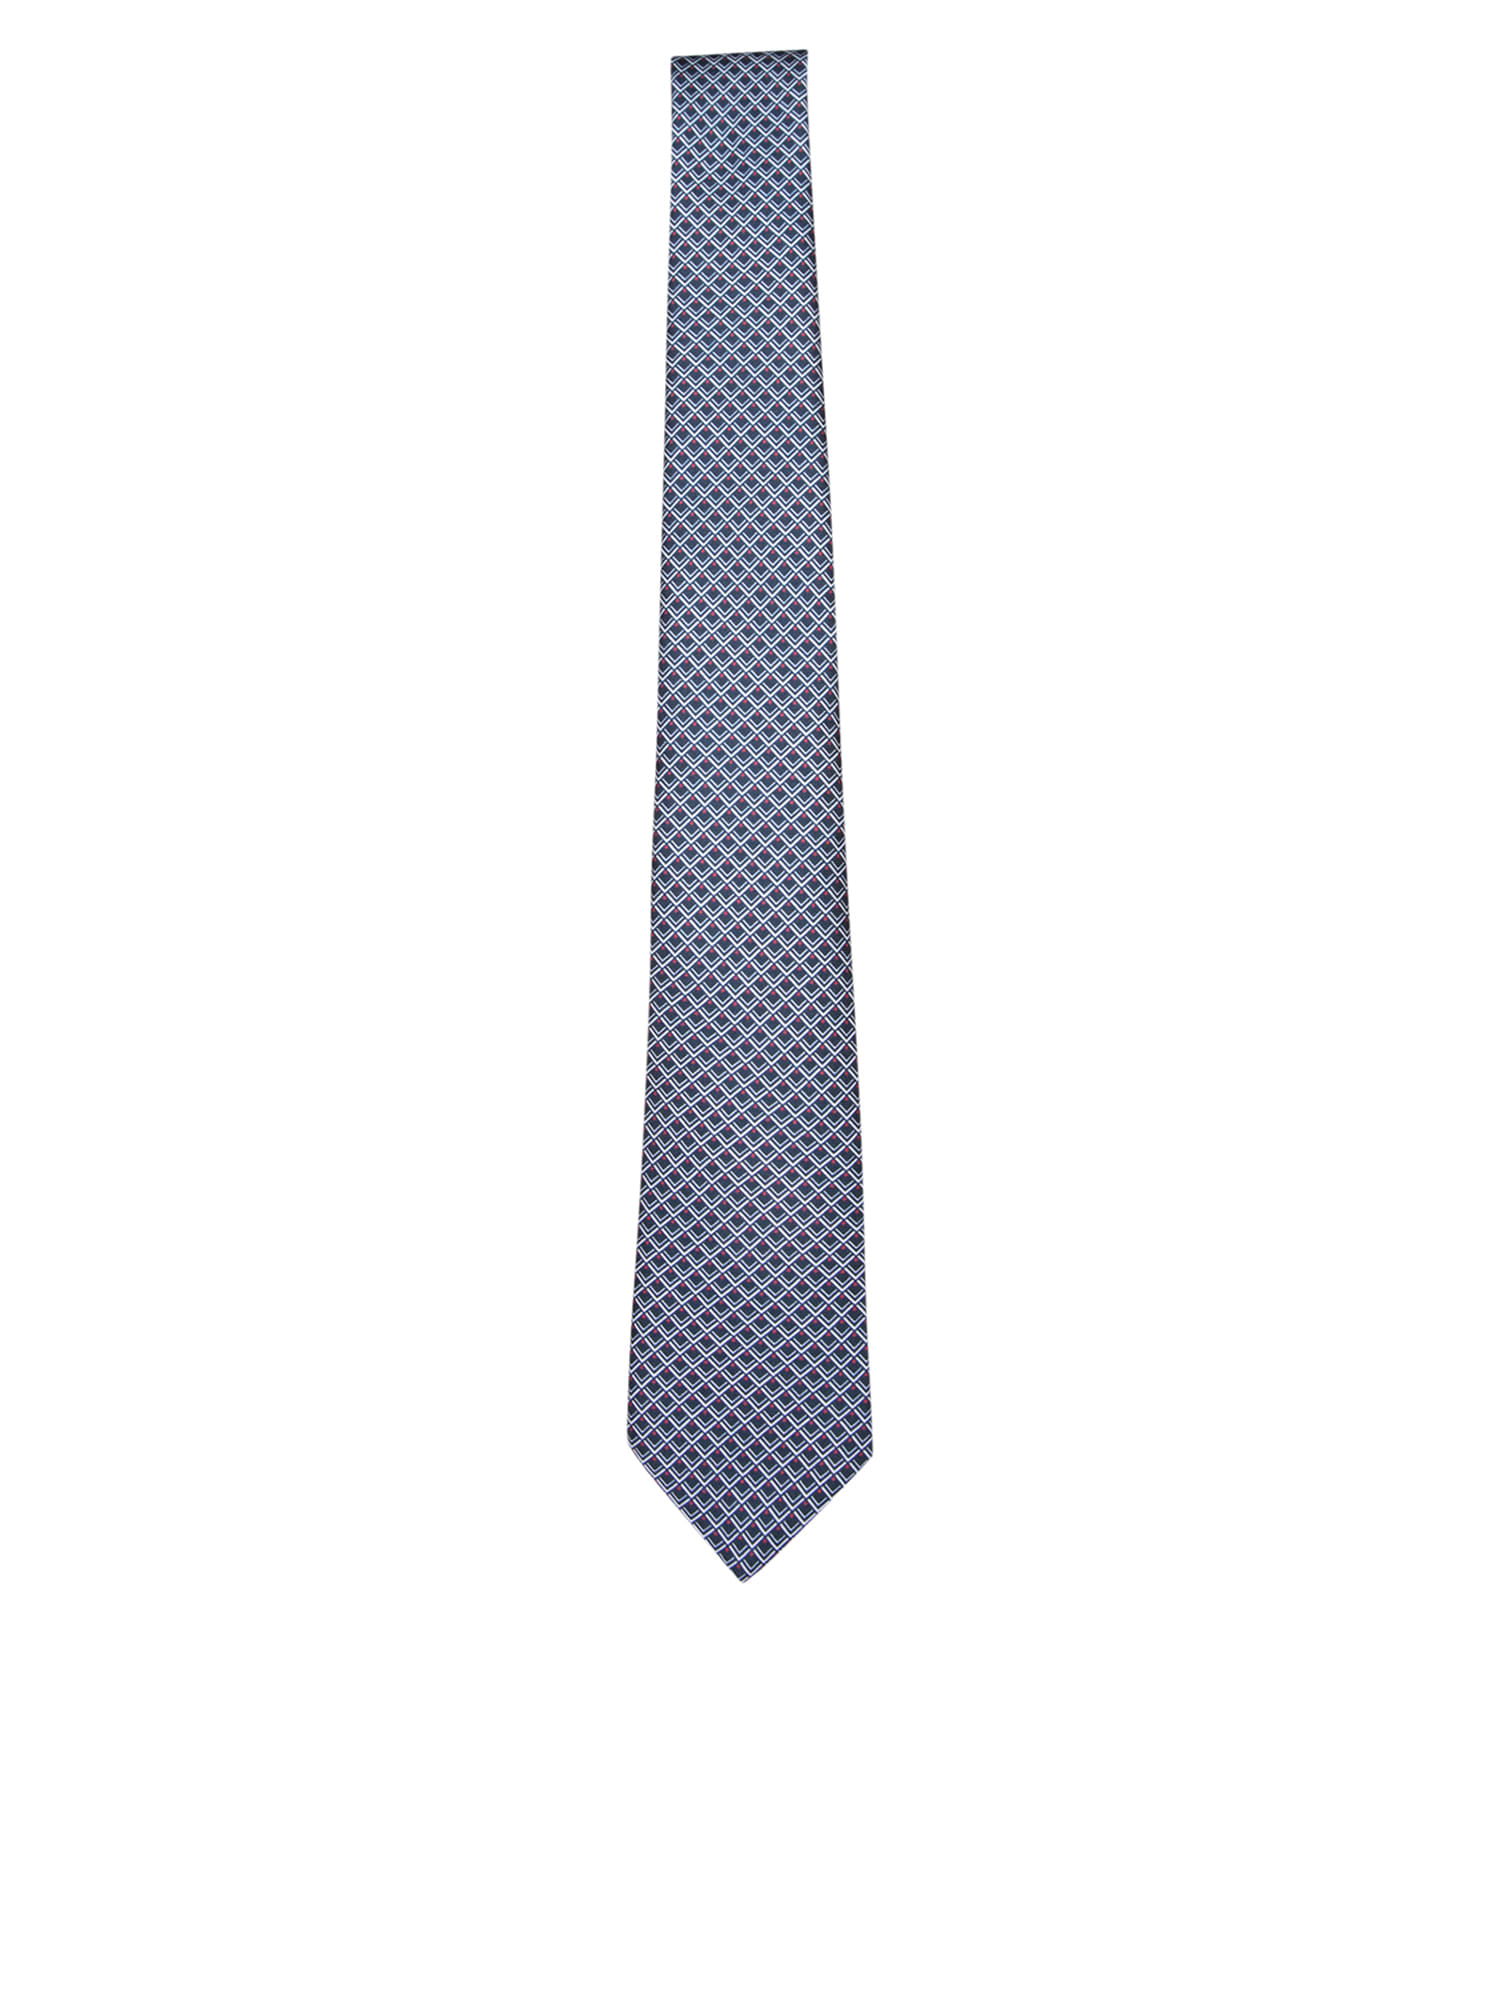 Navy Blue Geometric Tie